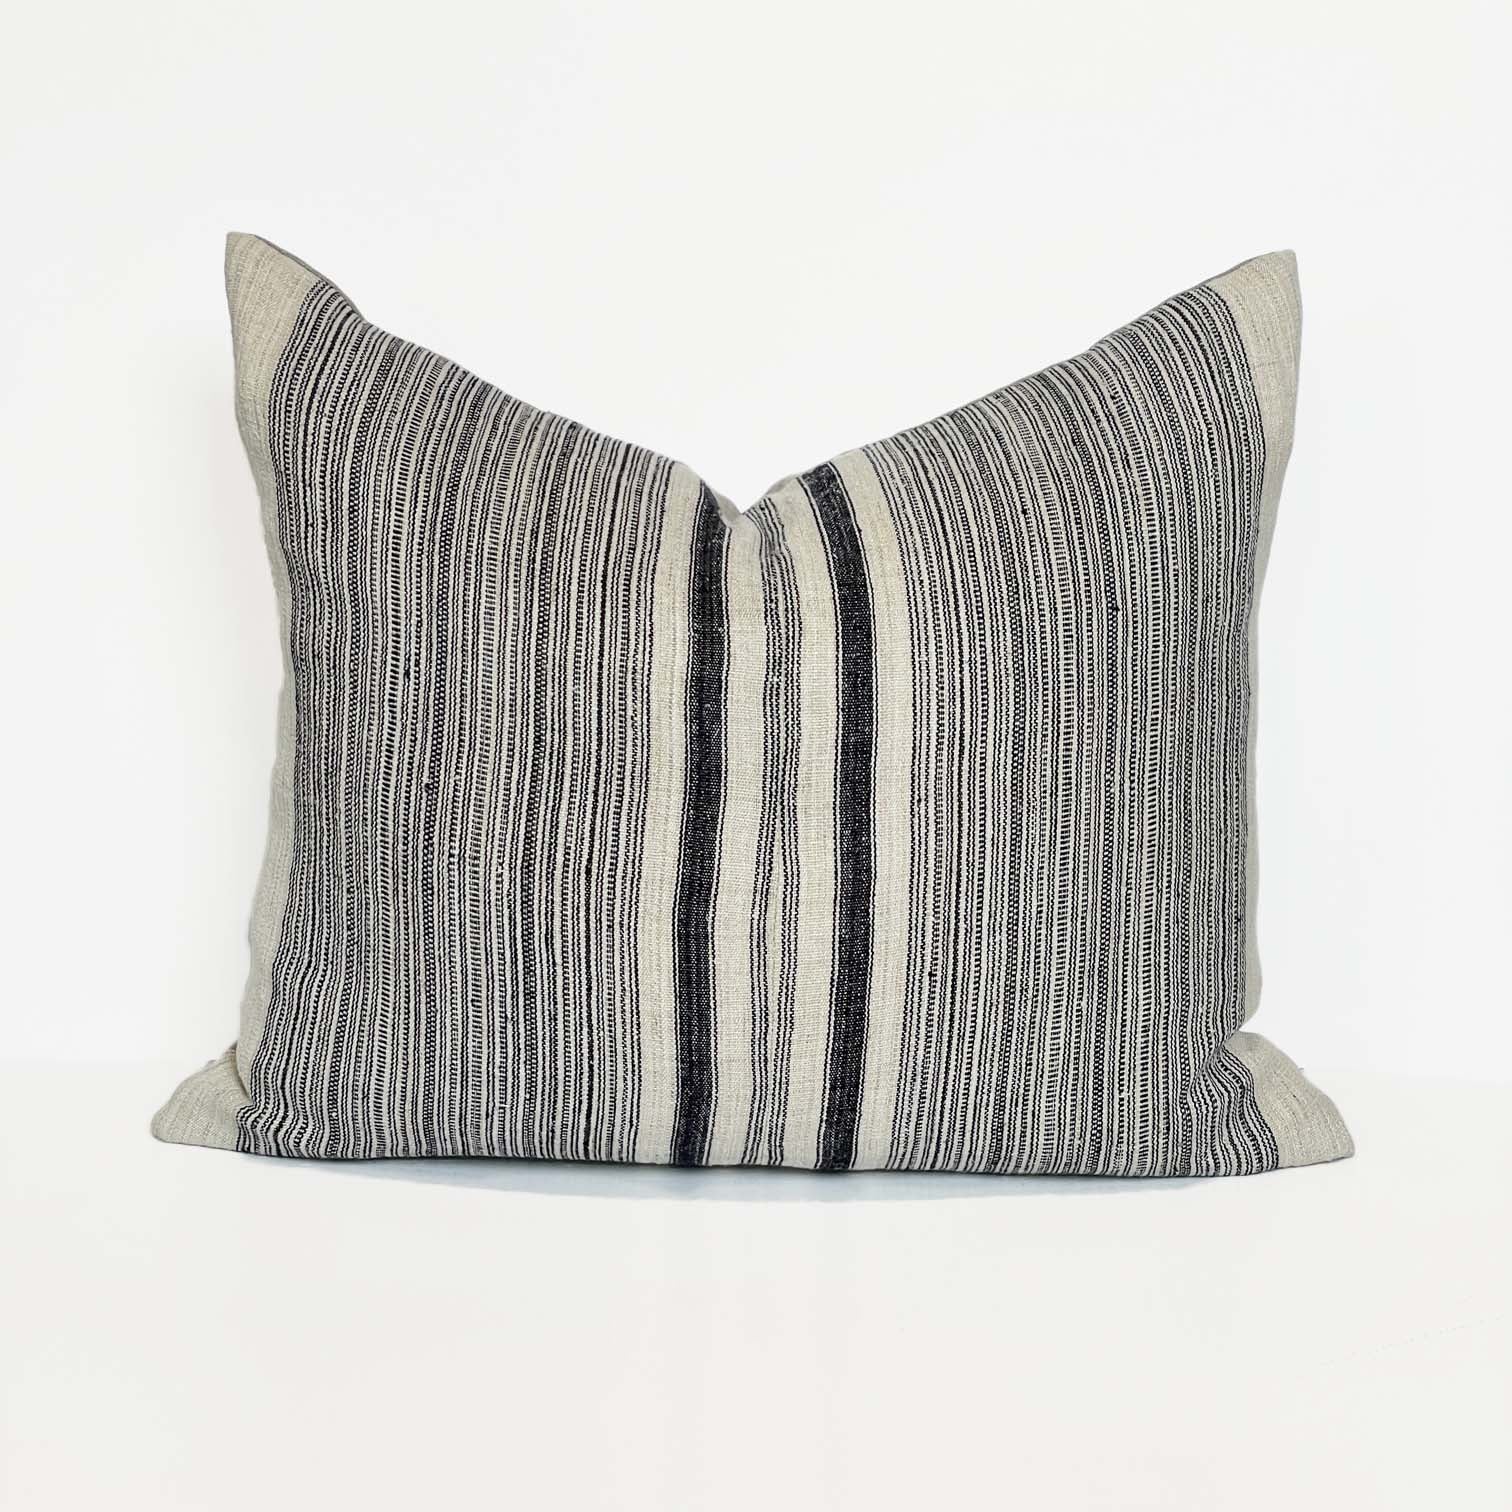 Vintage Hemp Striped Pillow